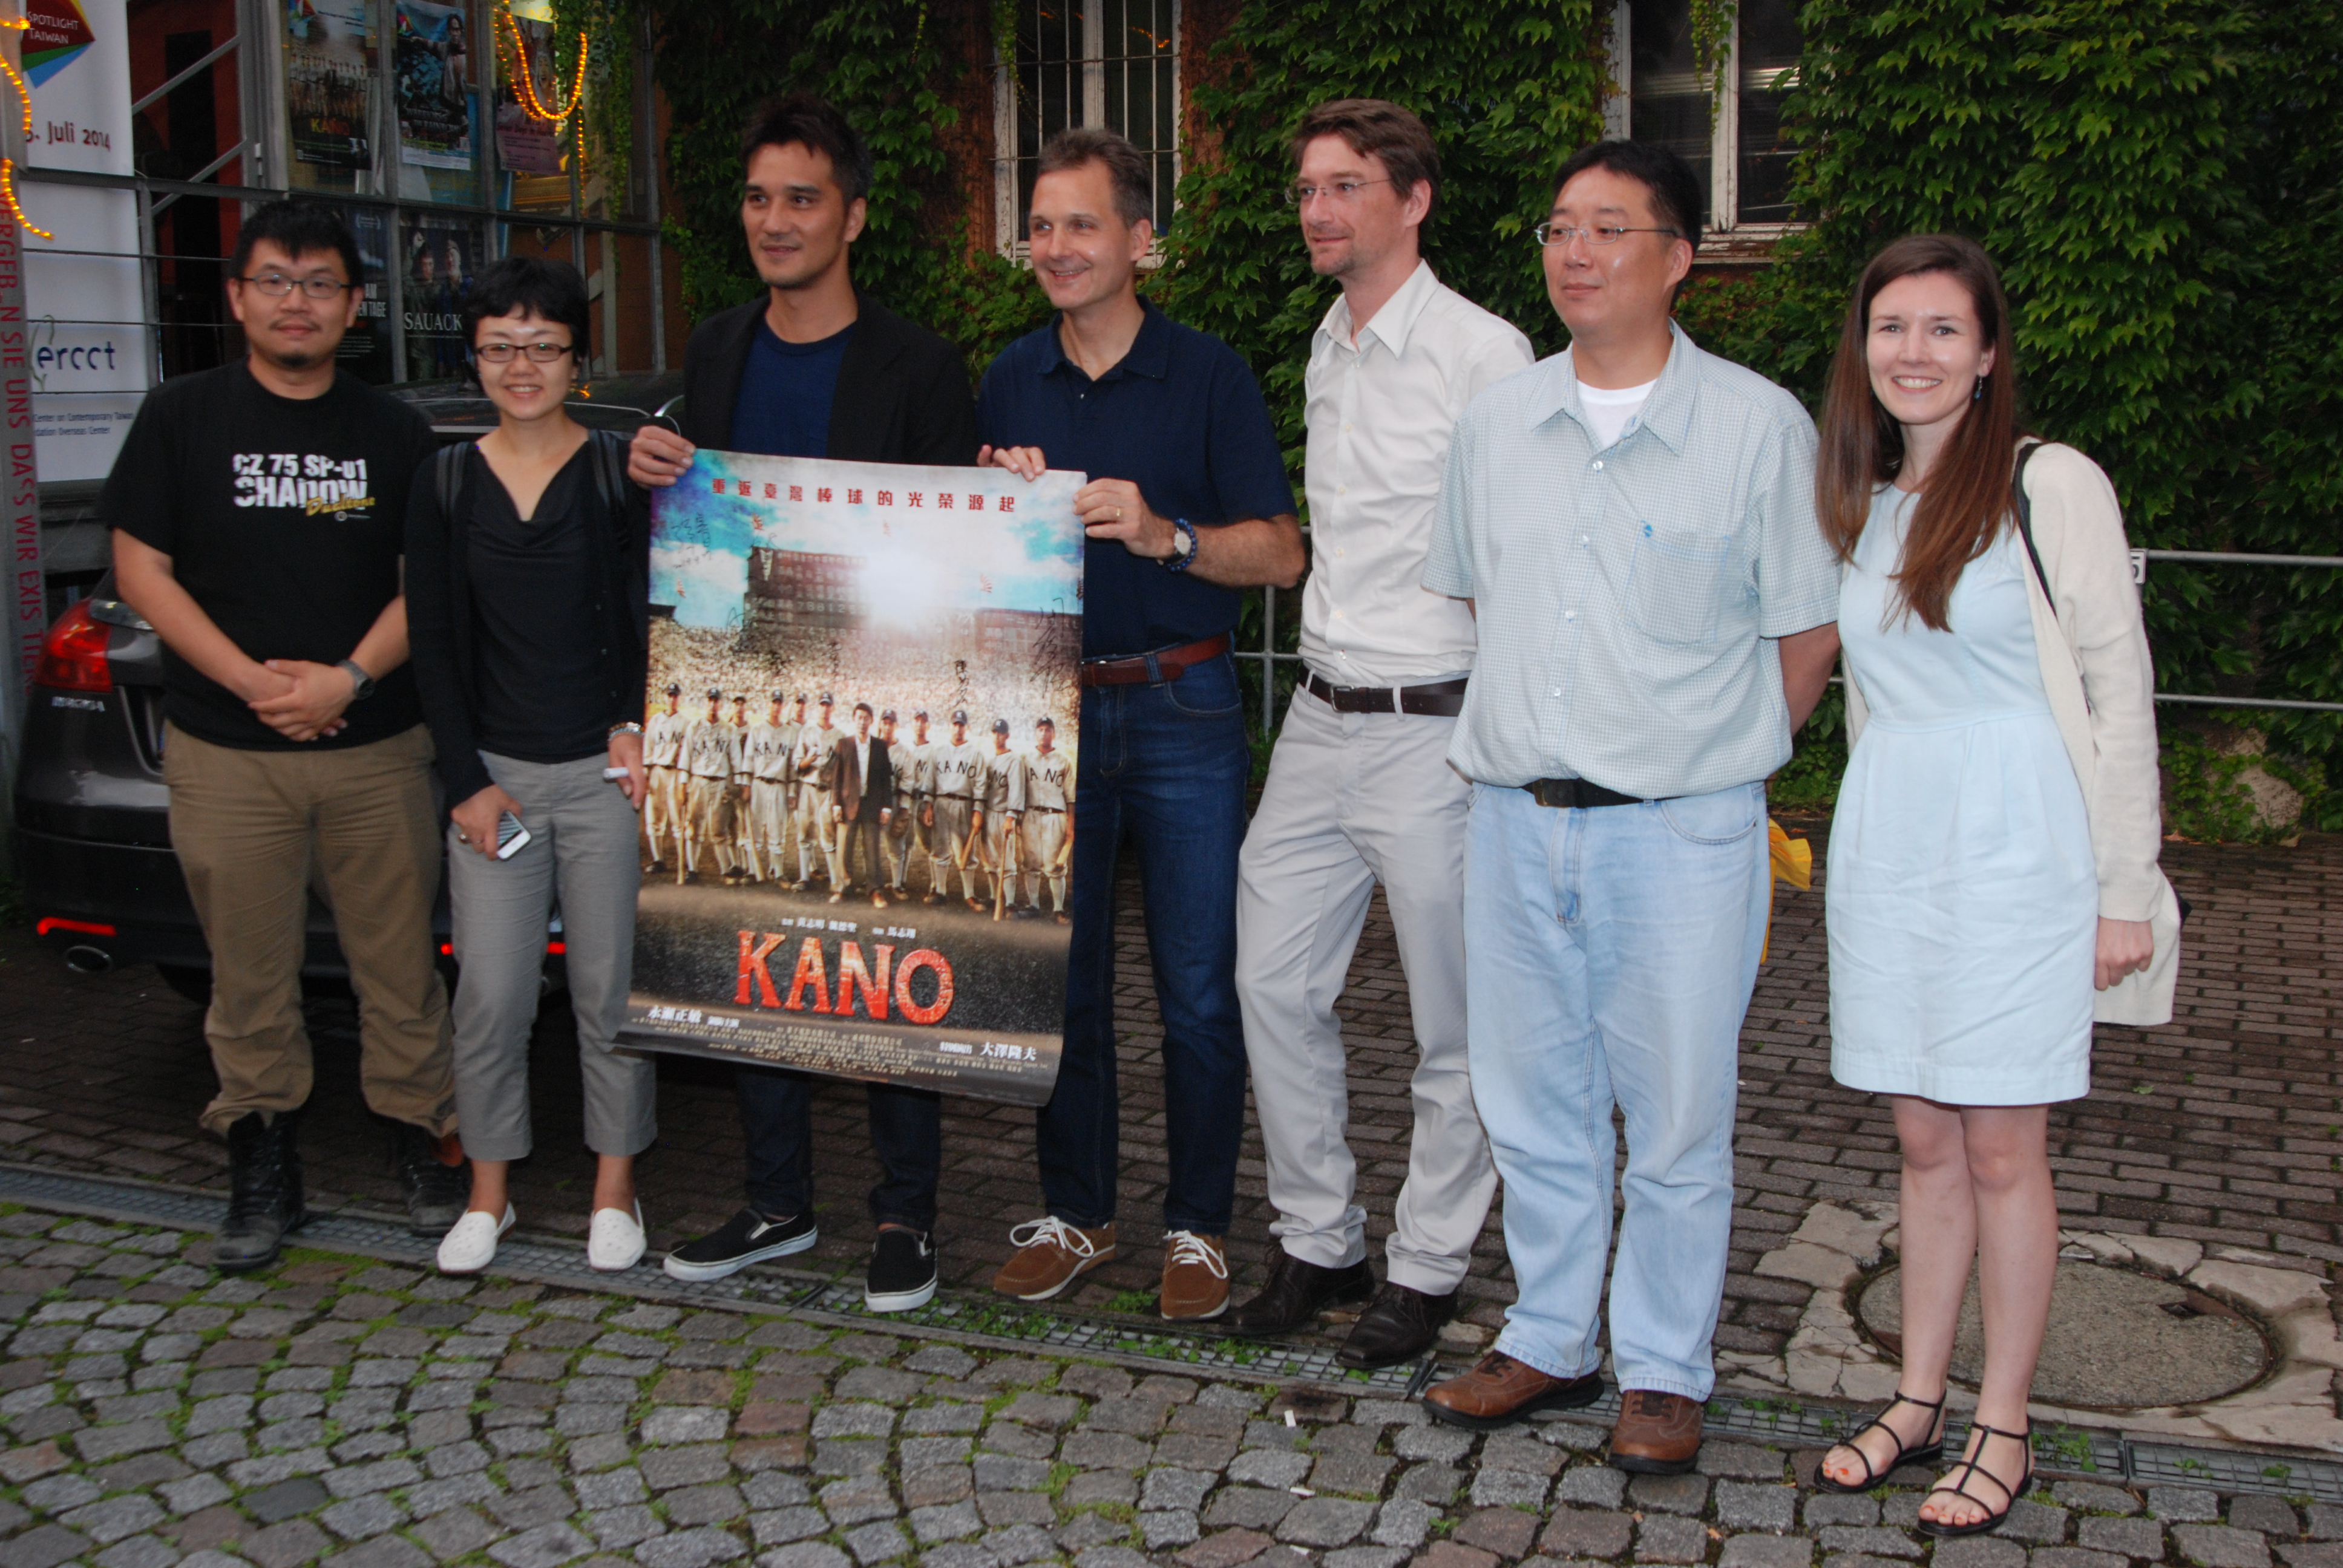 Umin Boya presented KANO in Tübingen